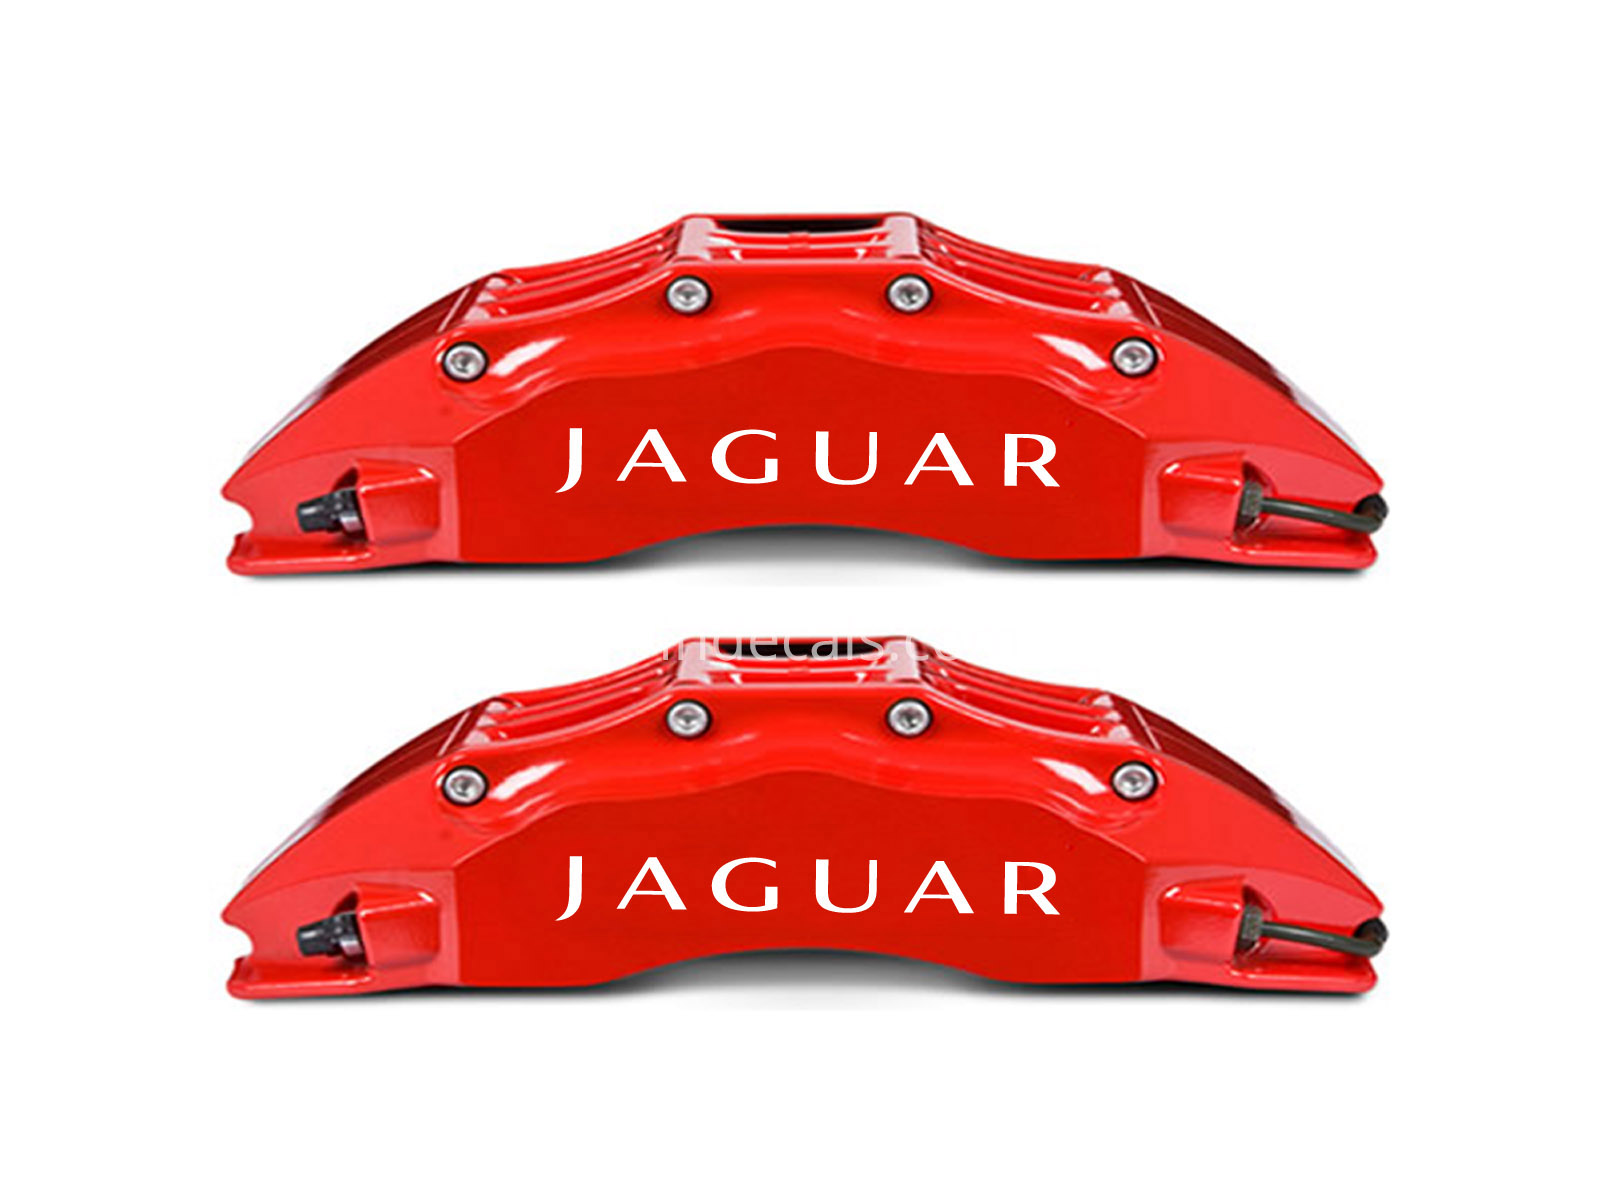 6 x Jaguar Stickers for Brakes - White